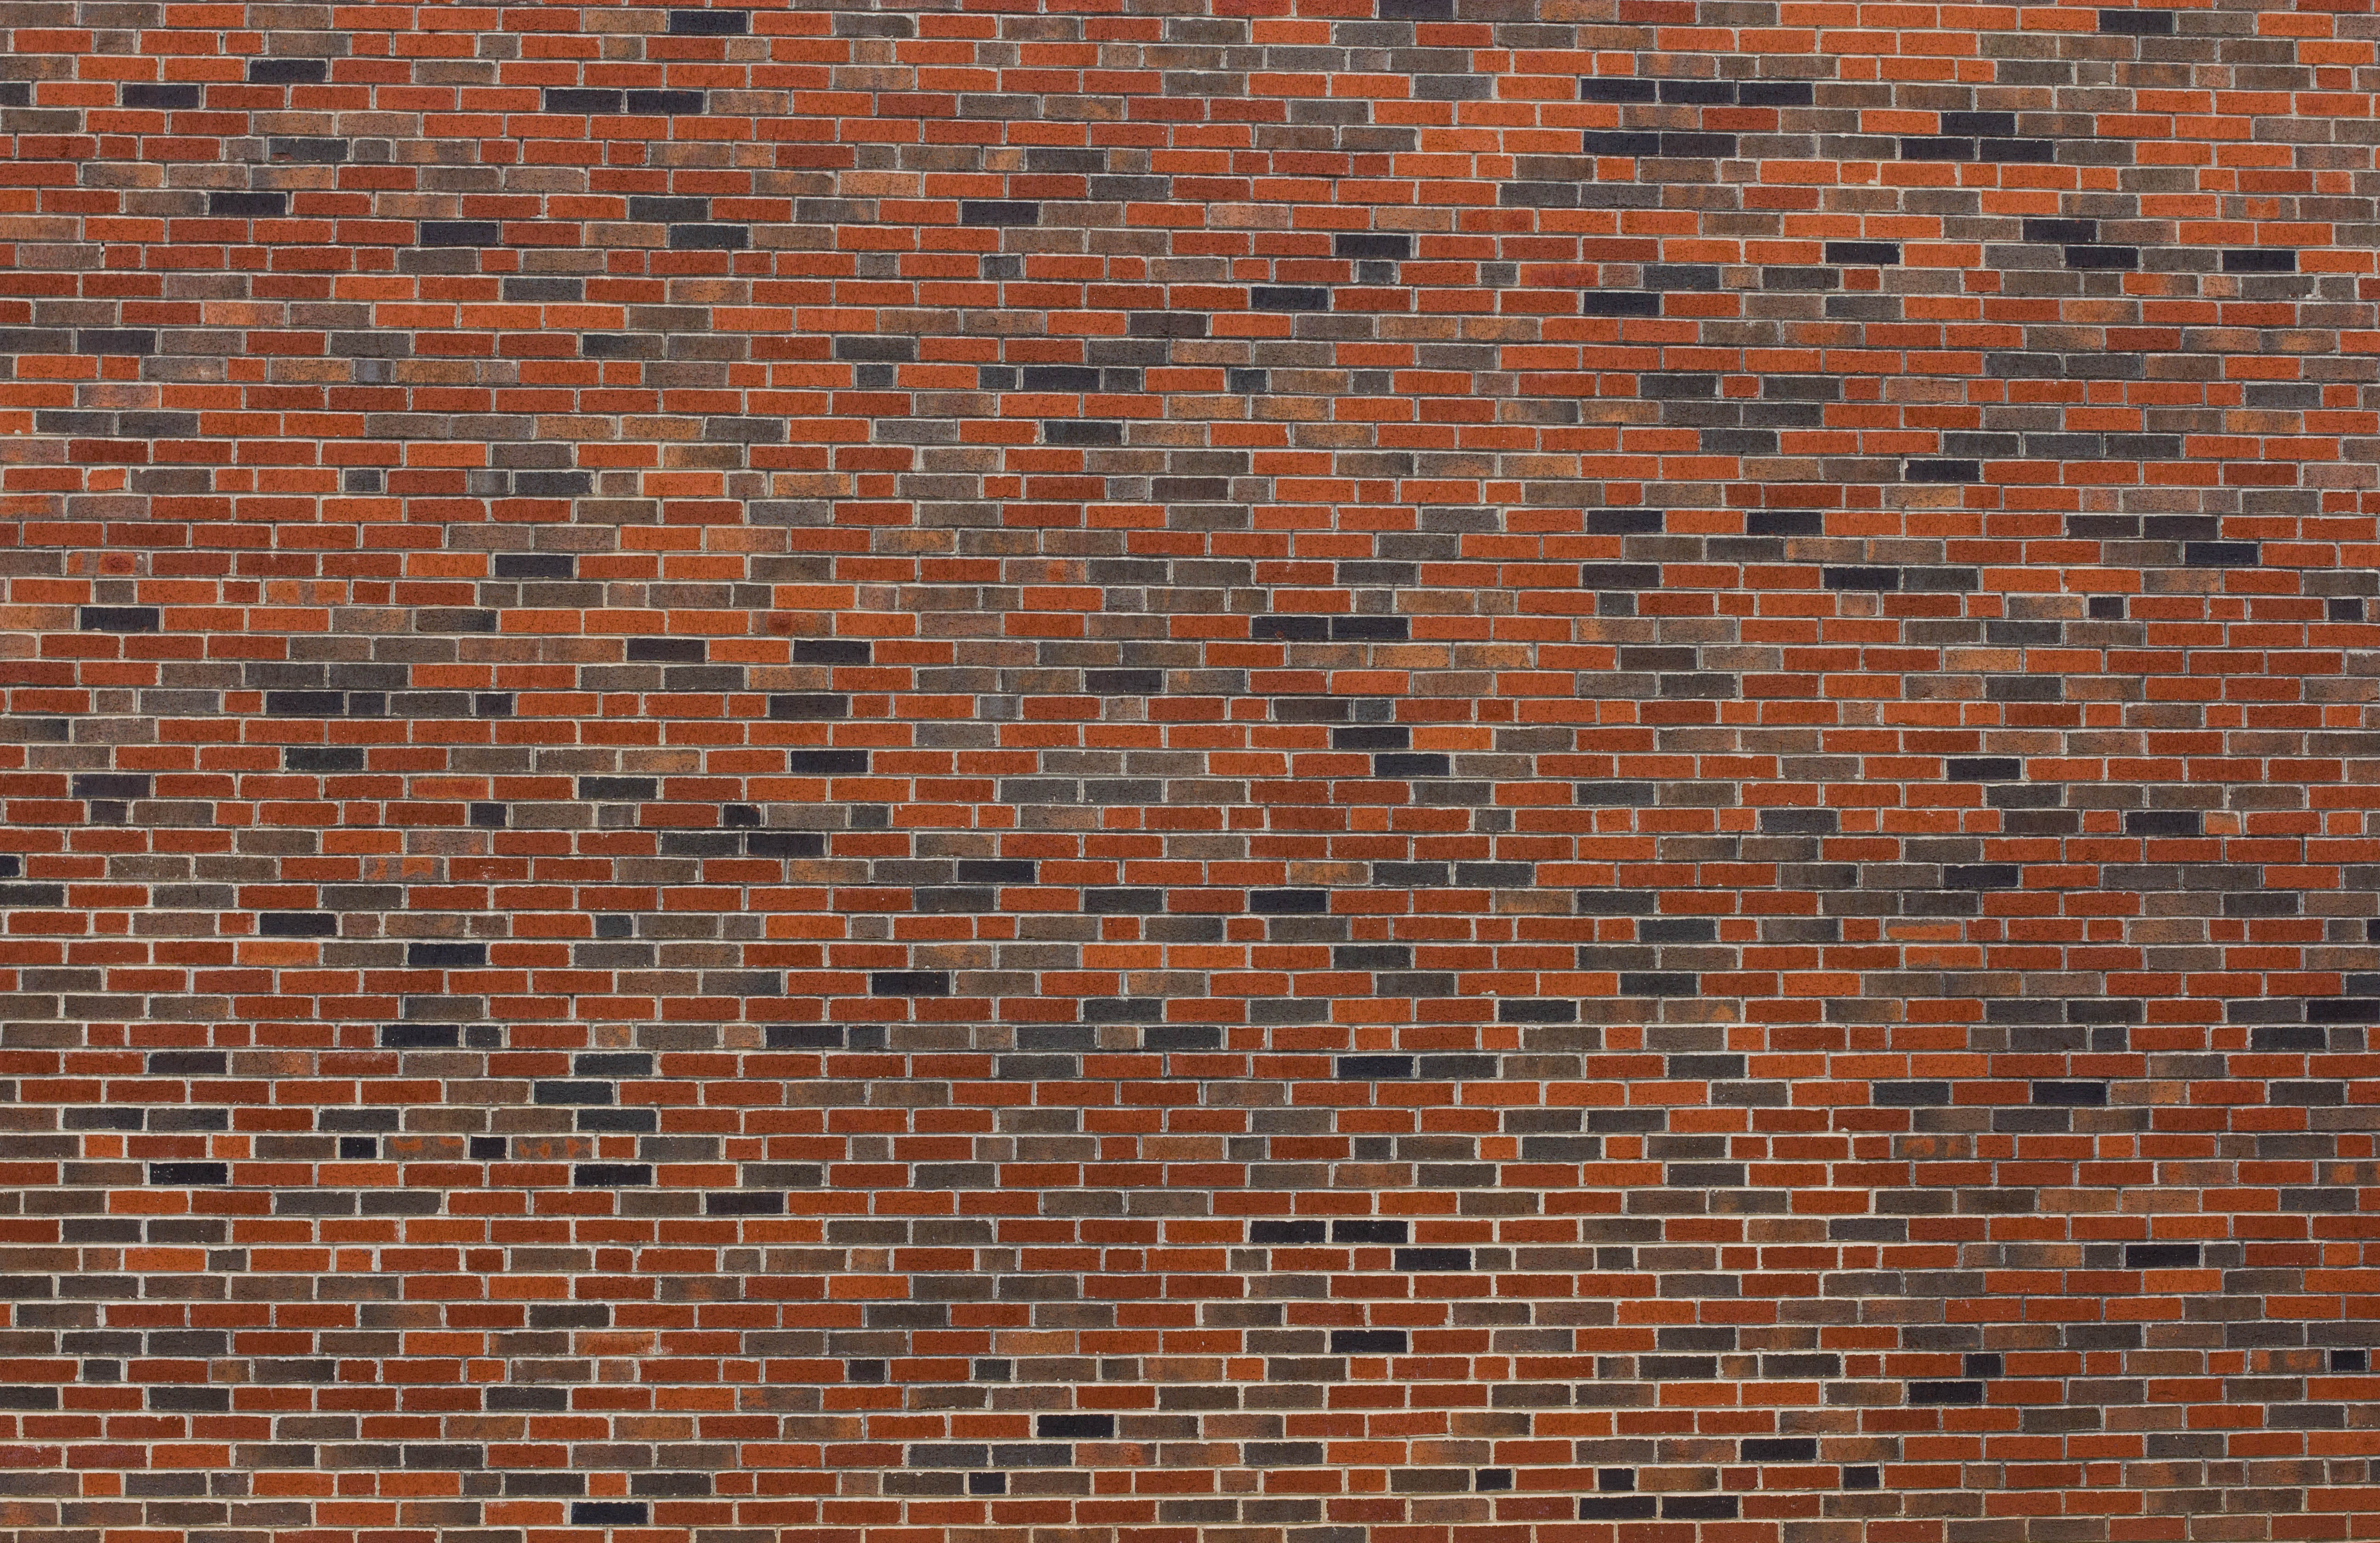 Bricks iPhone wallpapers